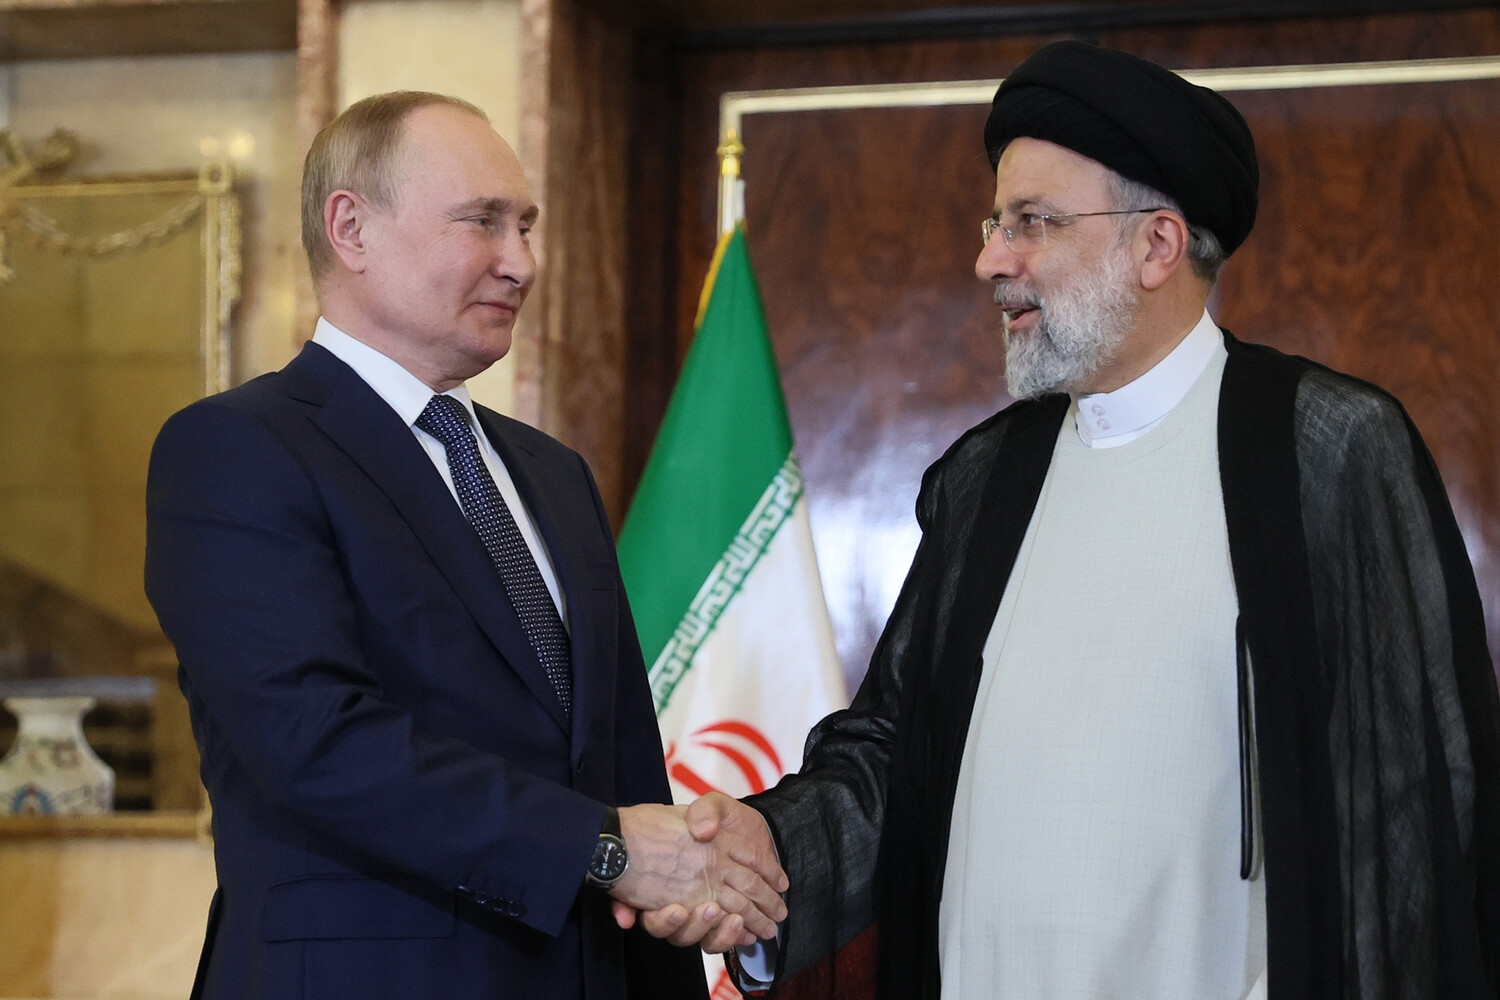 Путин и Раиси обсудили плавное подключение Ирана к БРИКС